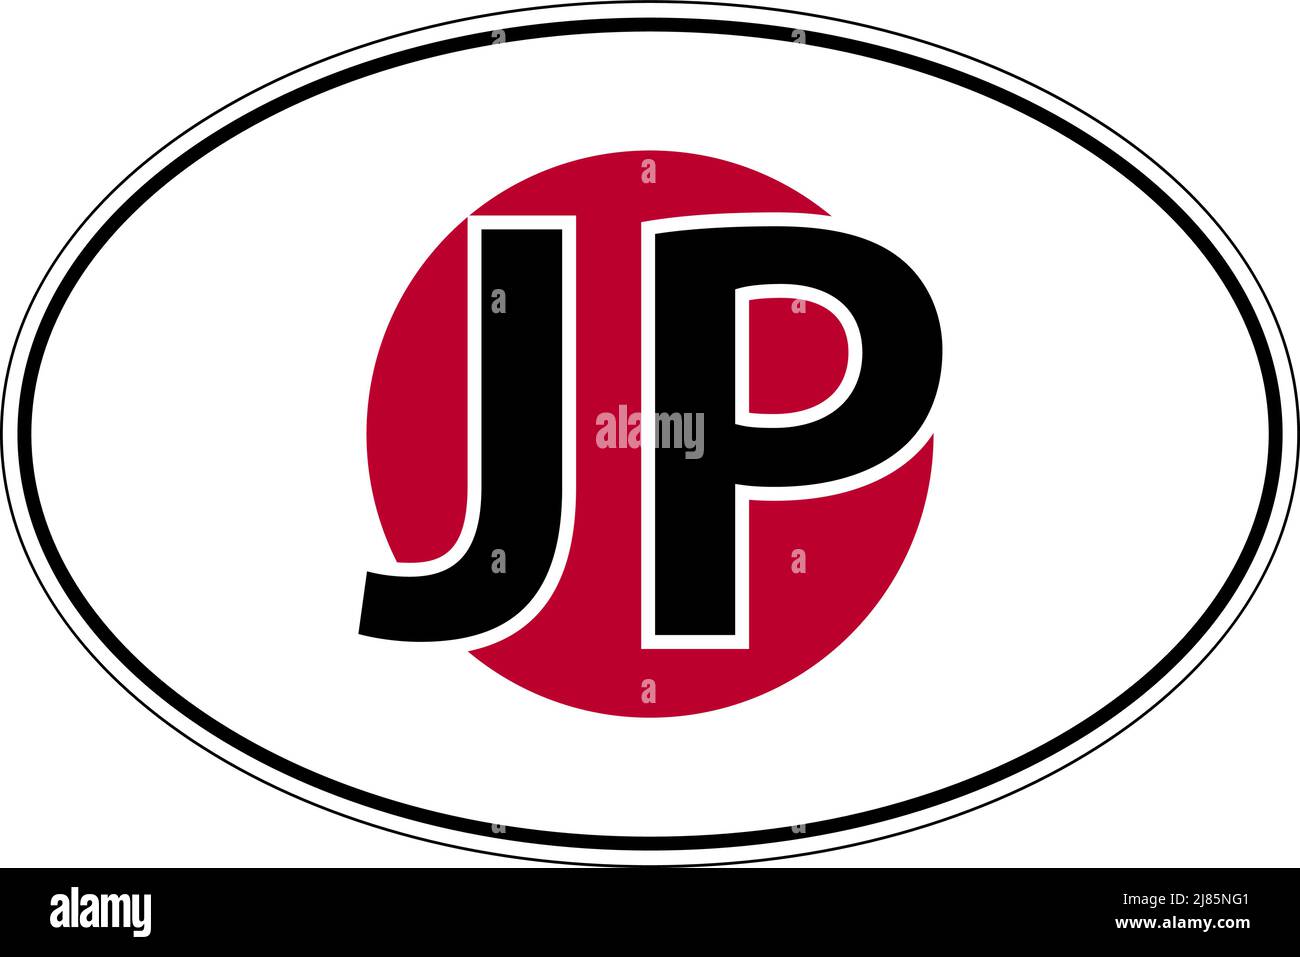 Japan JP flag label sticker on car, international license plate Stock Vector